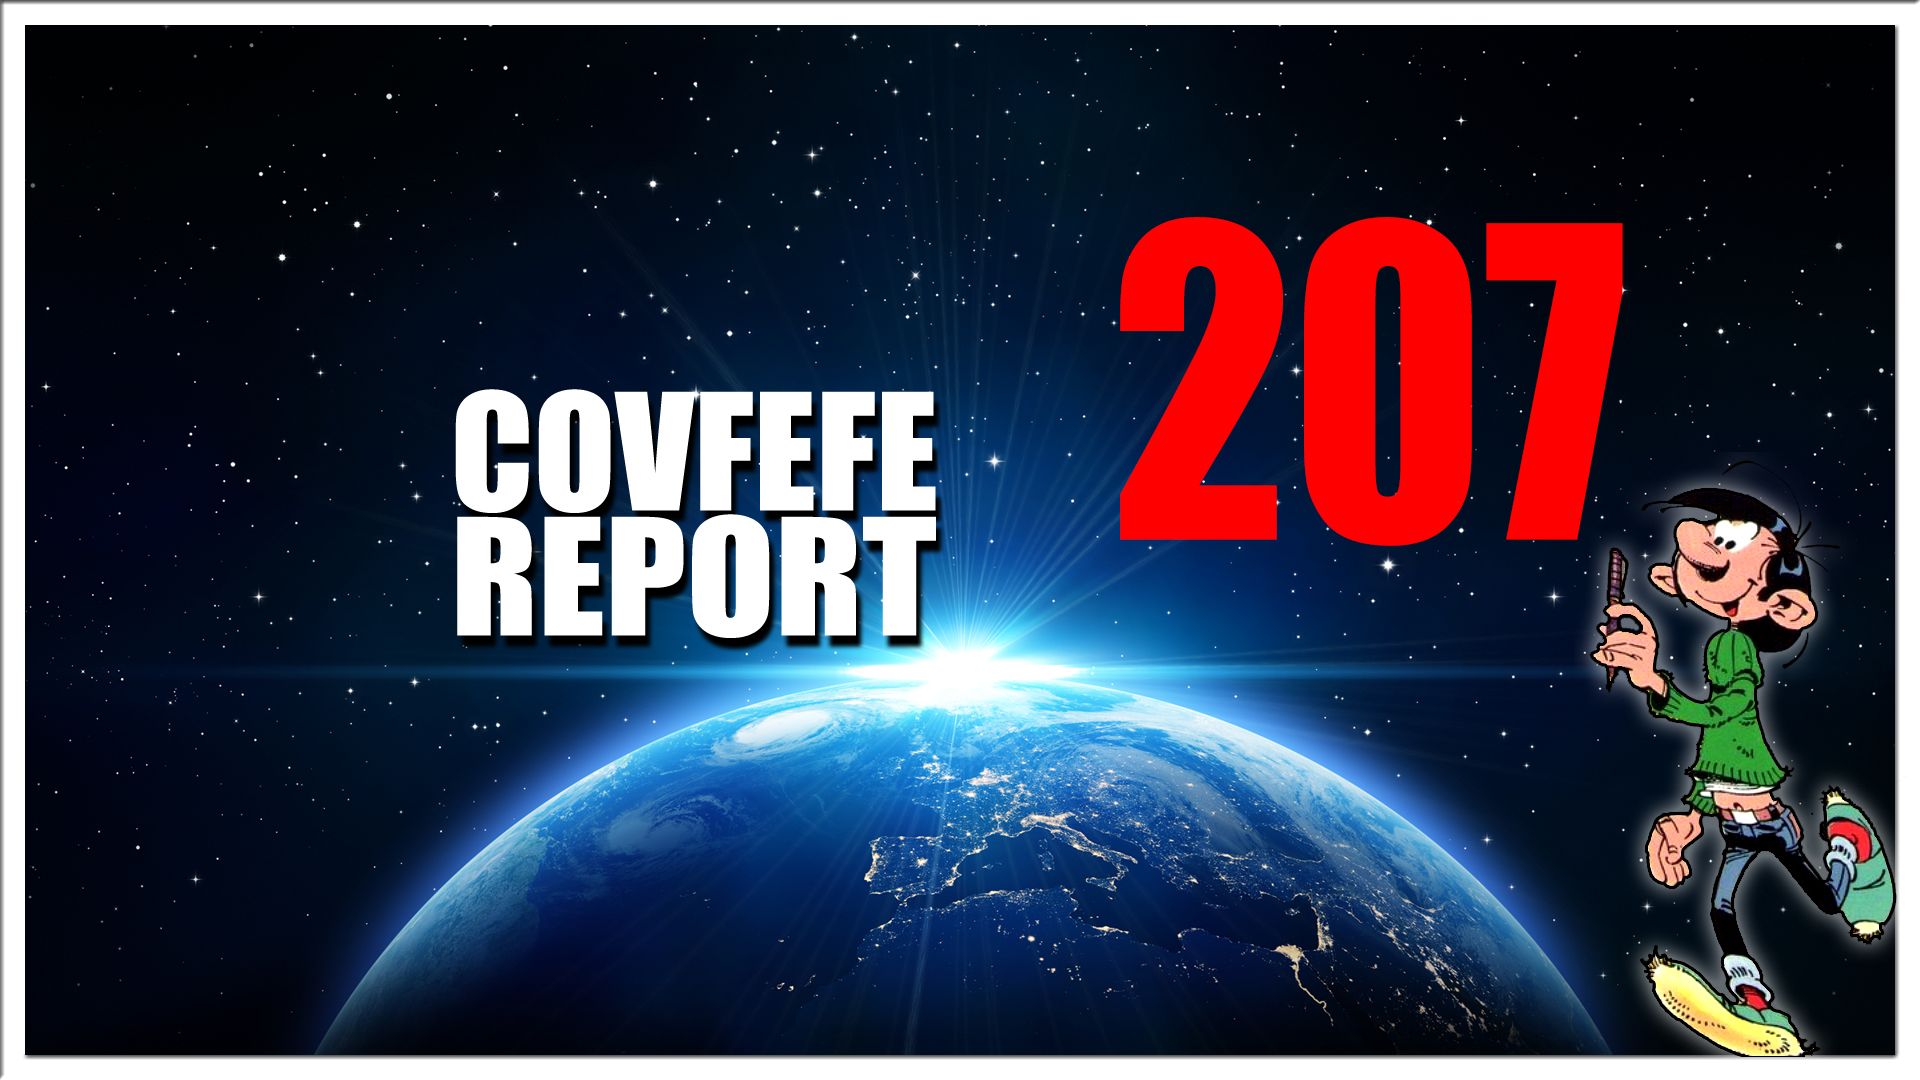 Covfefe Report 207. ngt